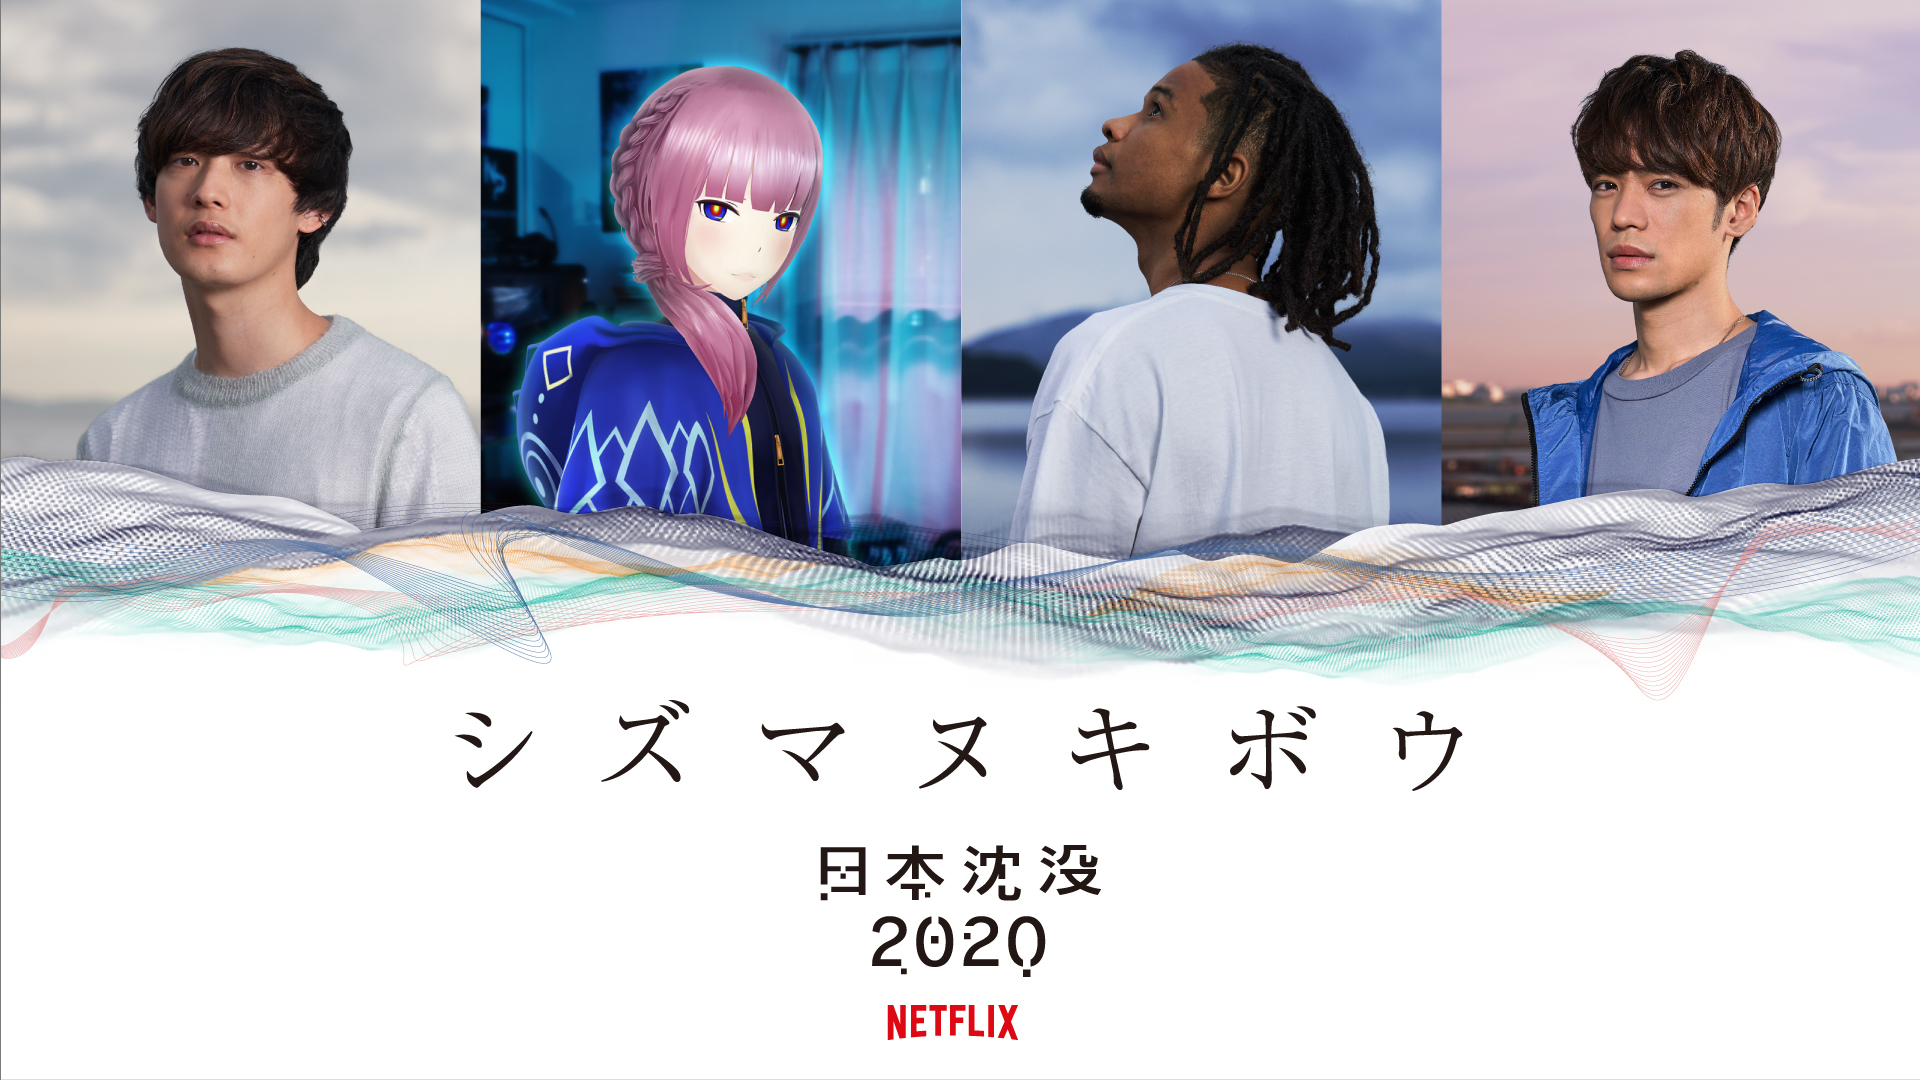 Netflixオリジナルアニメシリーズ『日本沈没2020』スピンオフ企画「シズマヌキボウ」